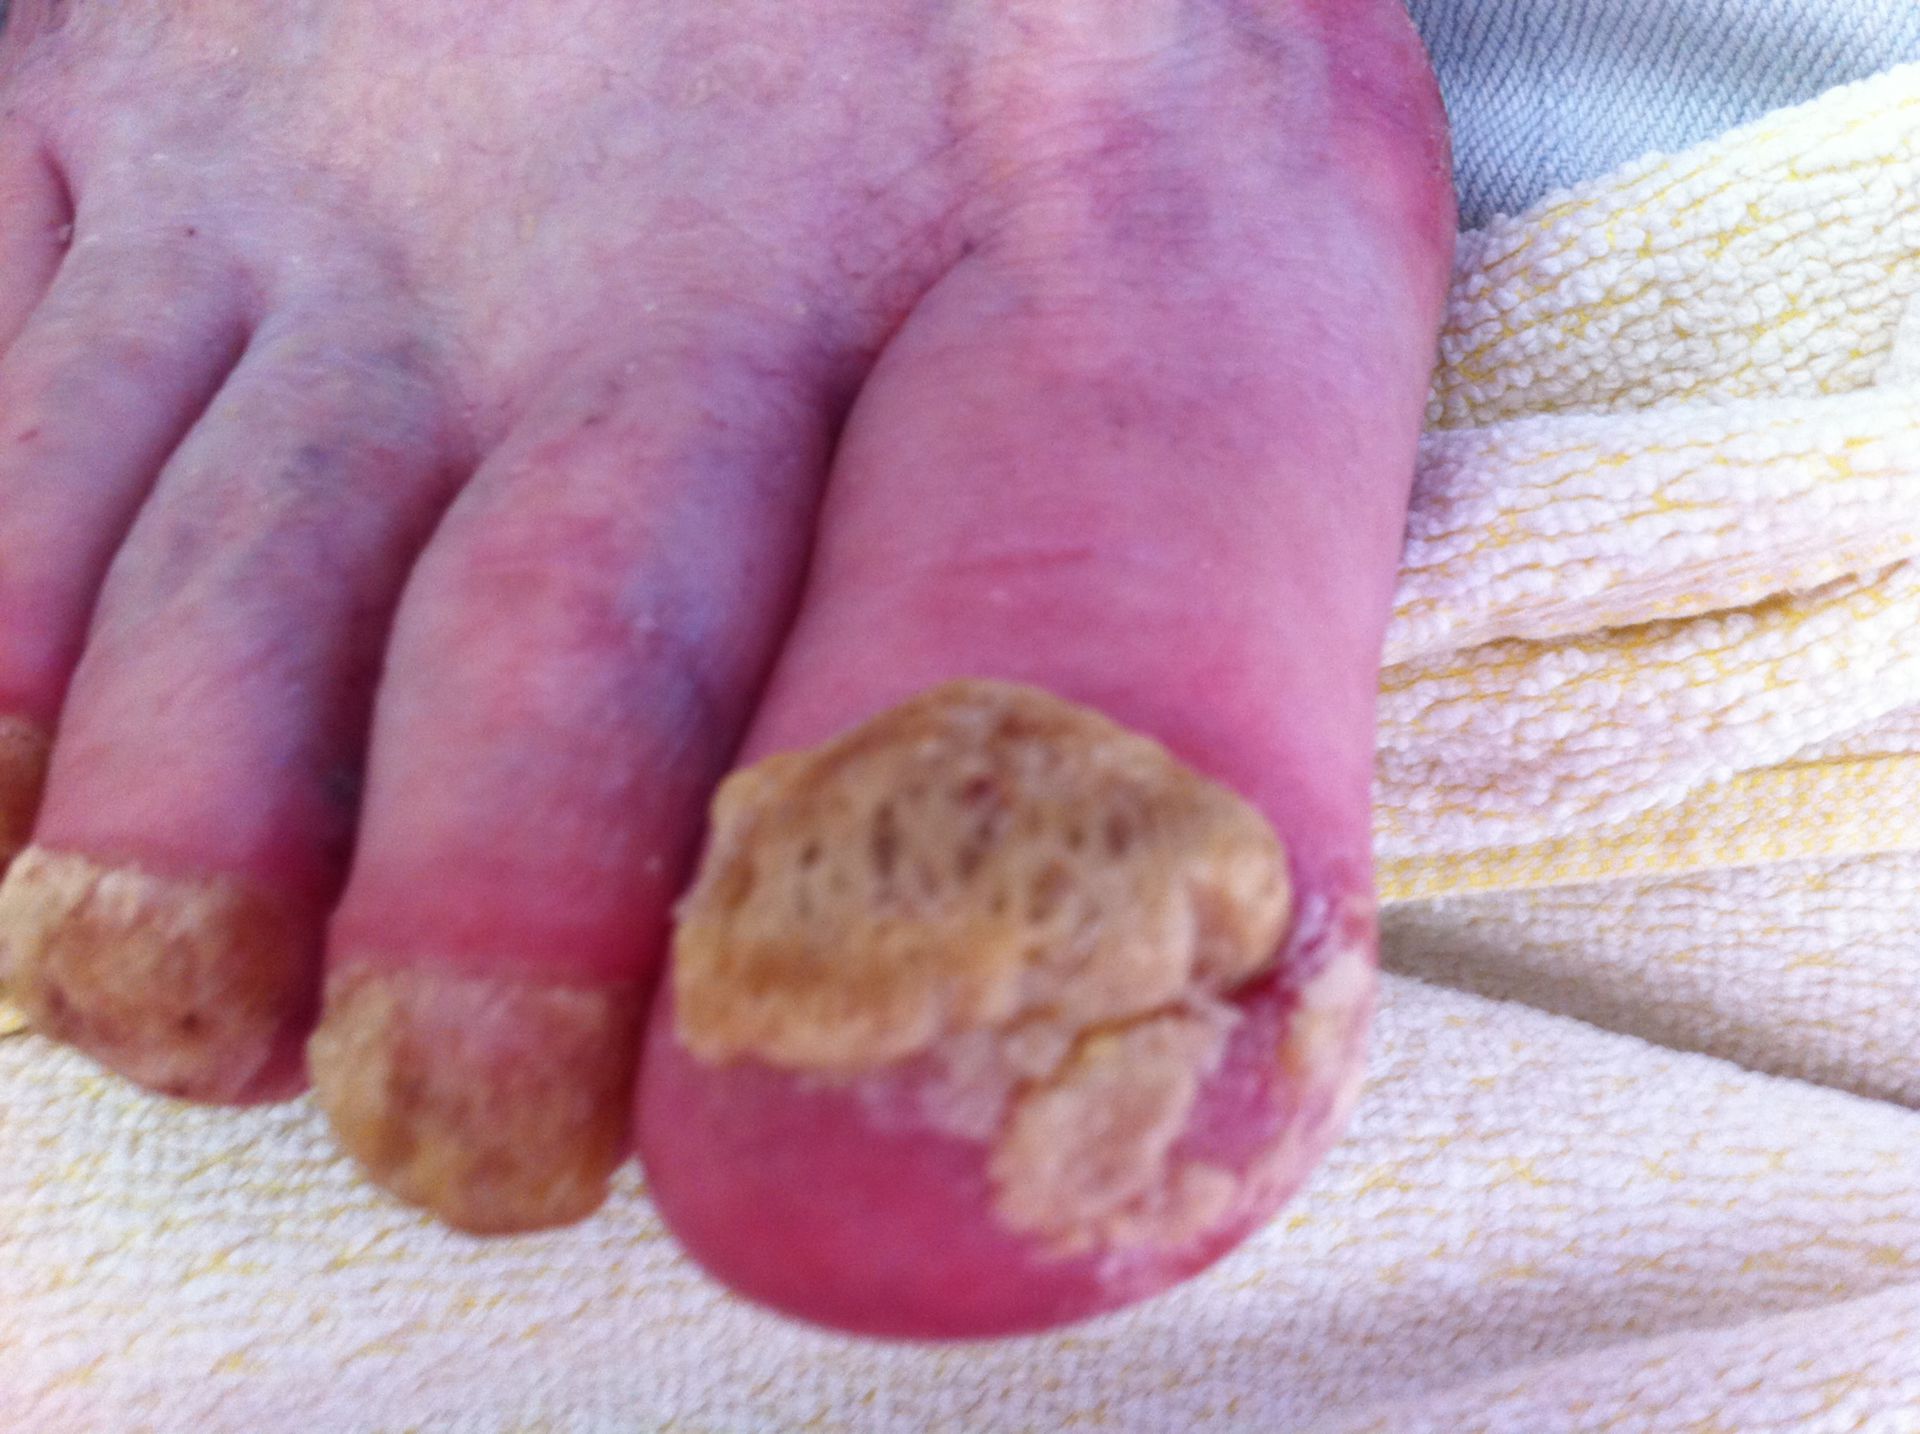 Crumbling nail in psoriasis